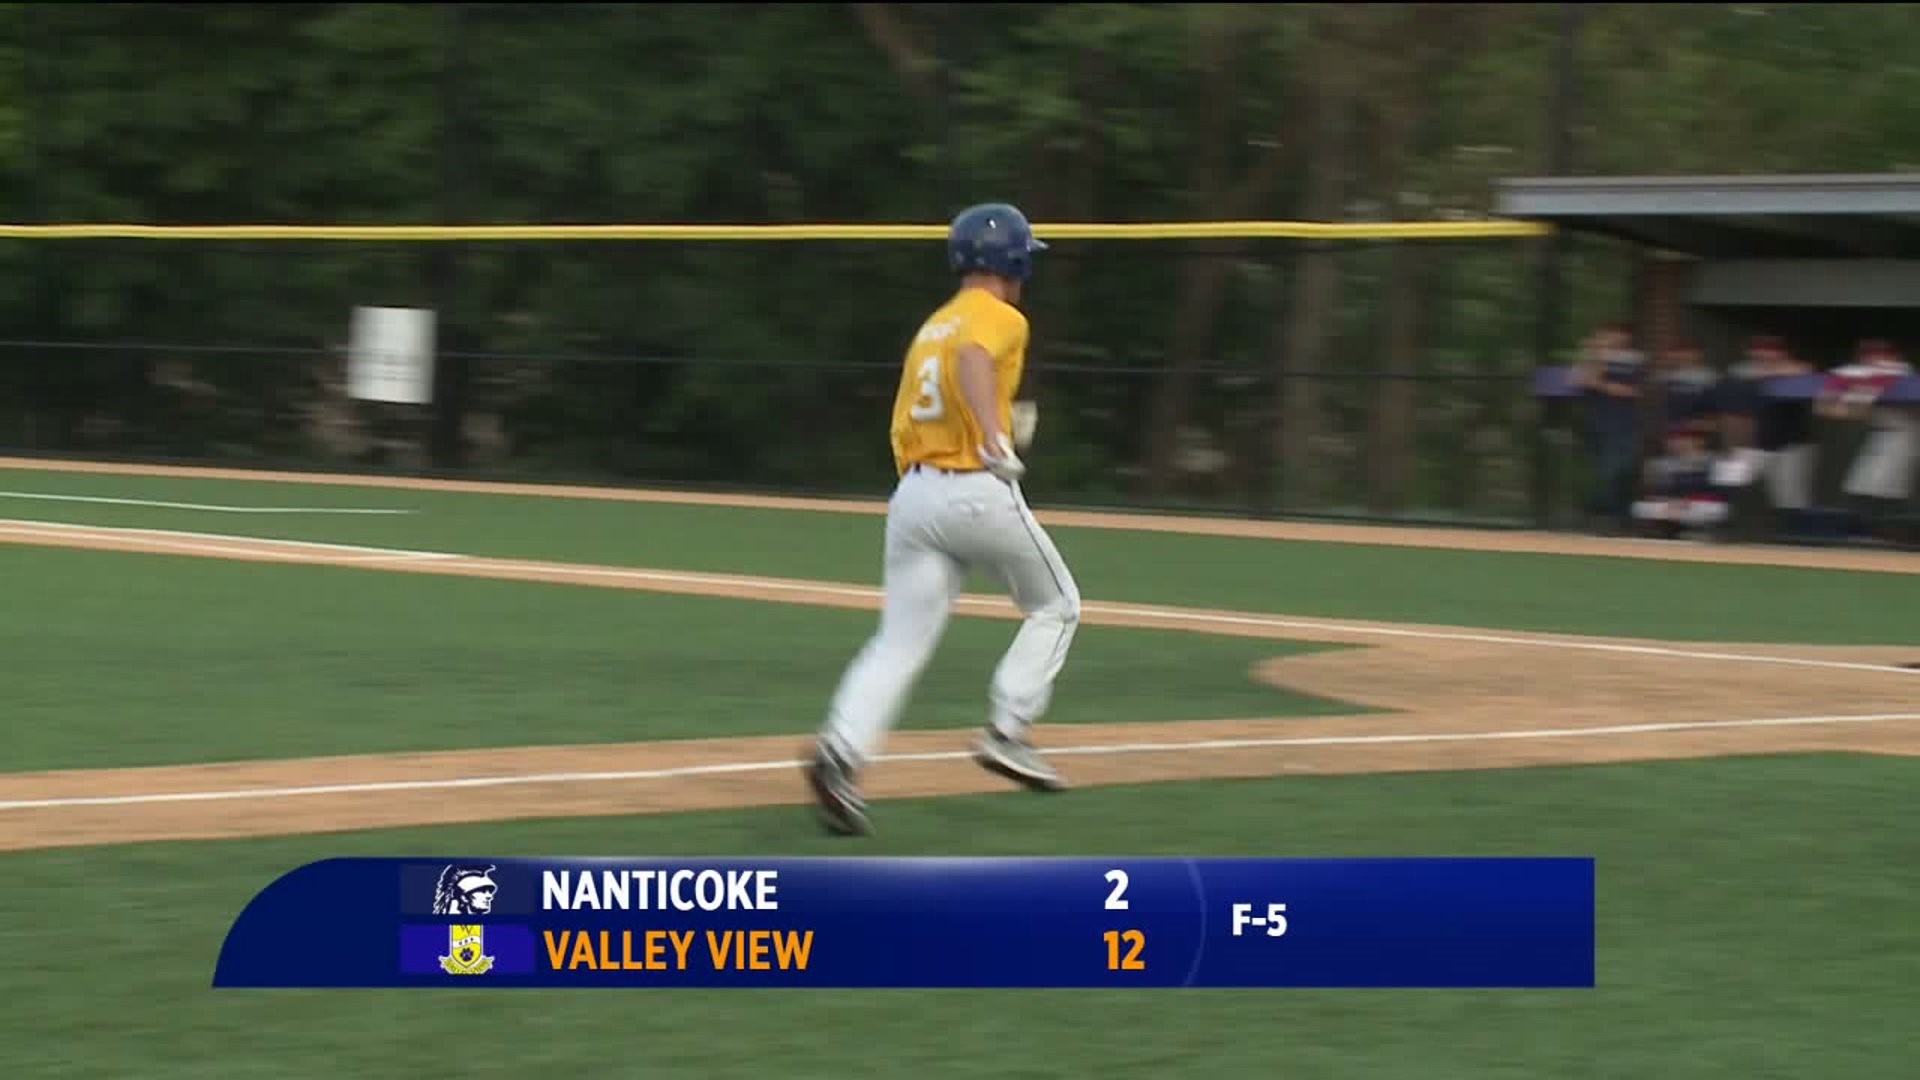 Nanticoke vs Valley View baseball